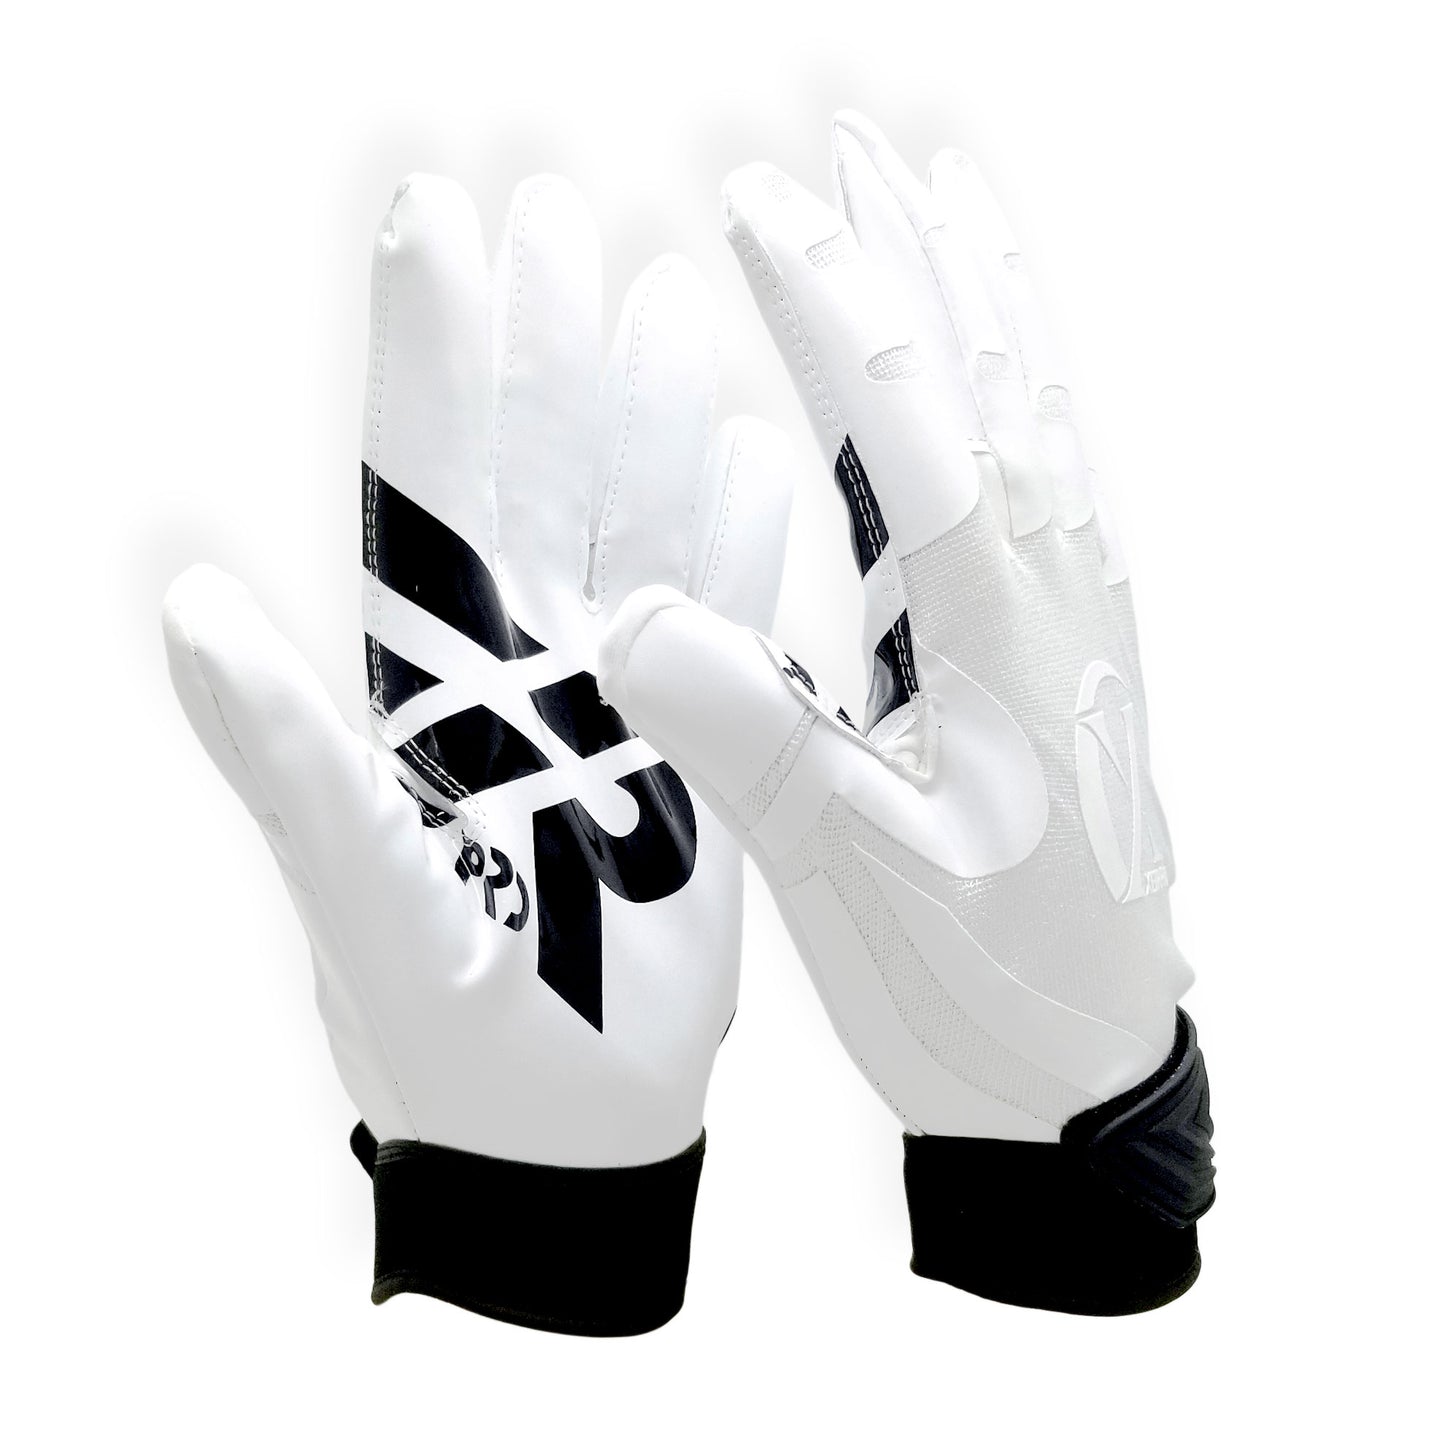 XEIR PRO Football Receiver Gloves (Youth Size) - White